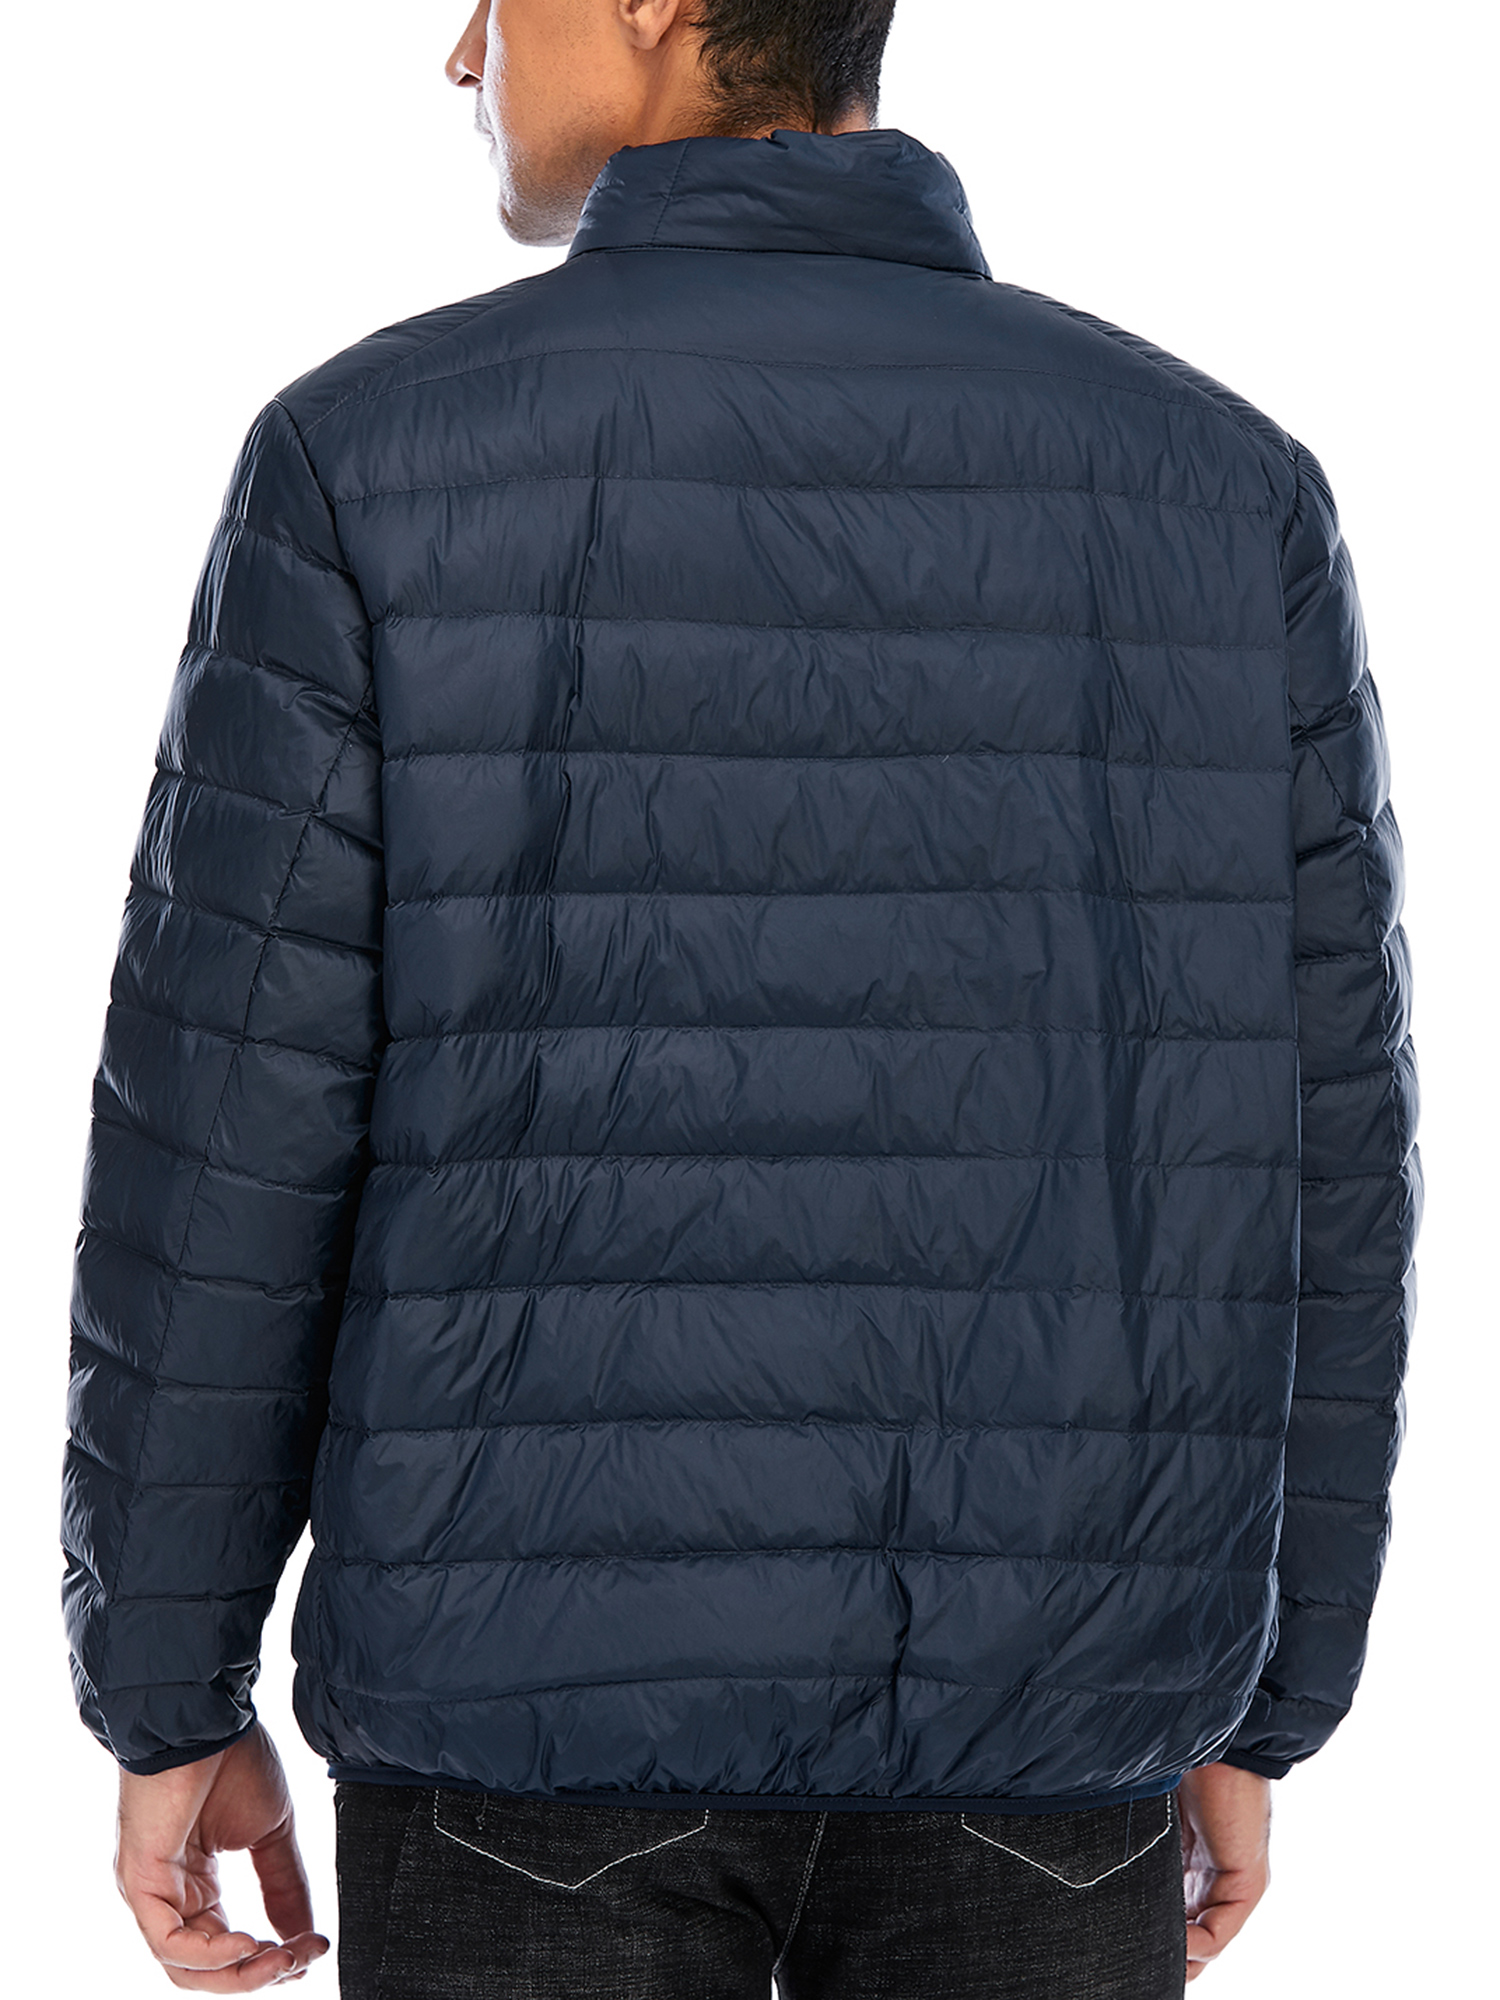 SAYFUT Men's Down Winter Packable Jacket Big & Tall Sizes M-4XL Outwear Jacket Coat Black/Blue/Gray - image 4 of 8